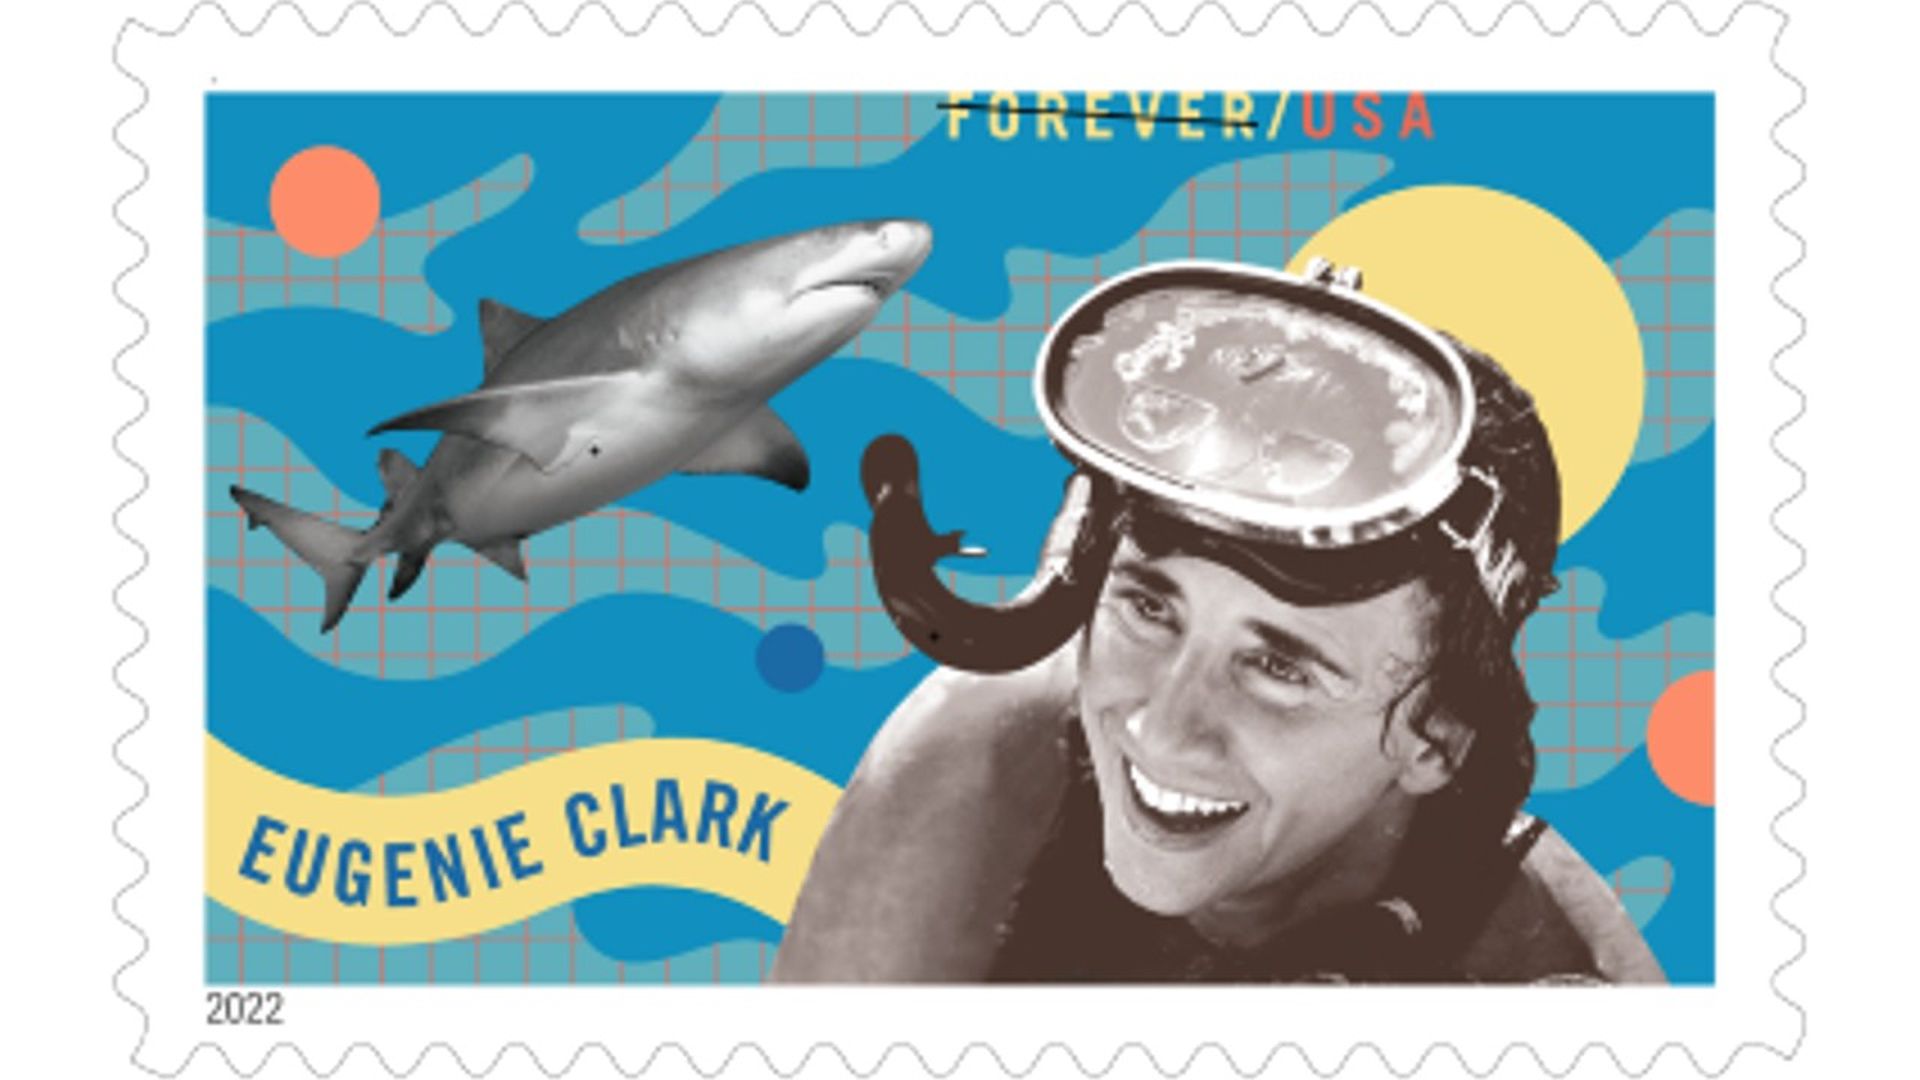 Eugenie Clark stamp